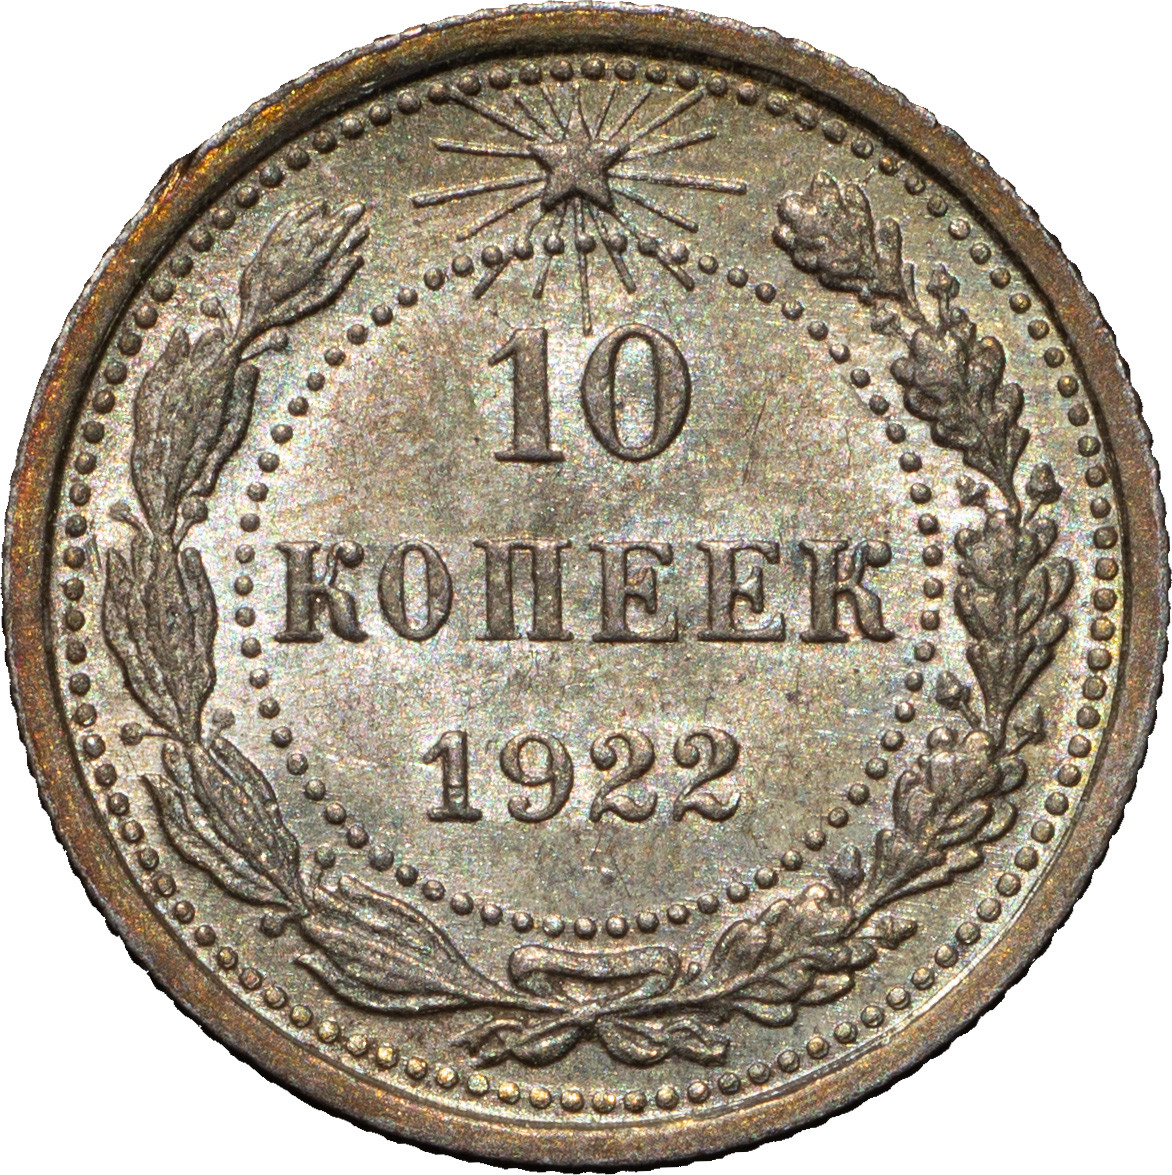 10 копеек 1922 года